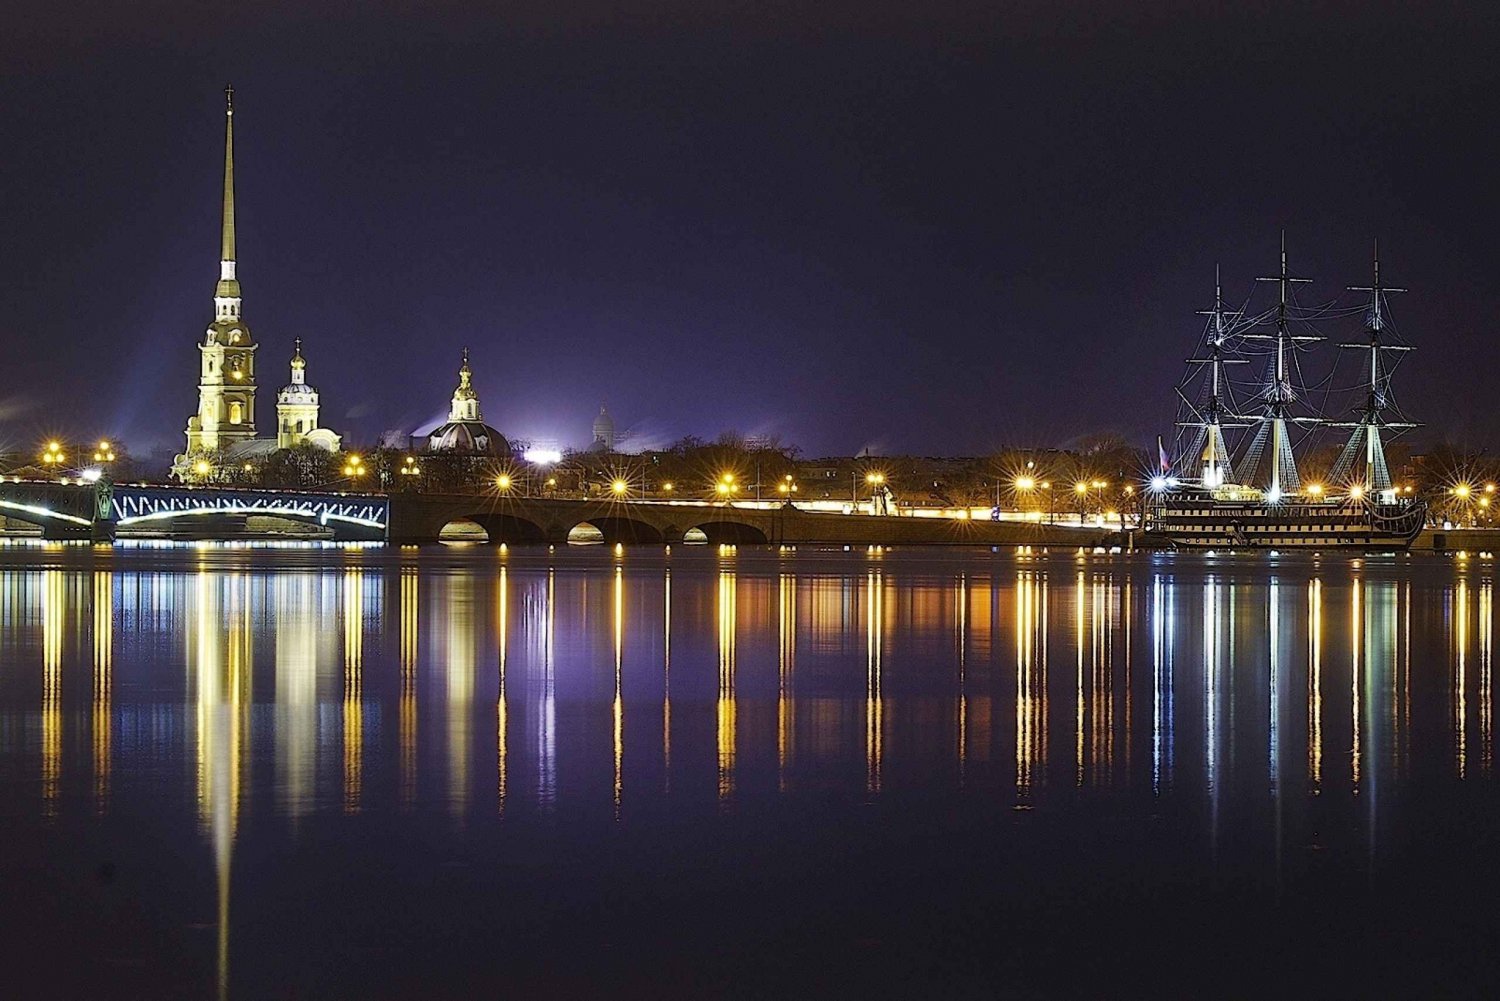 Saint Petersburg: Illuminations by Night City Tour